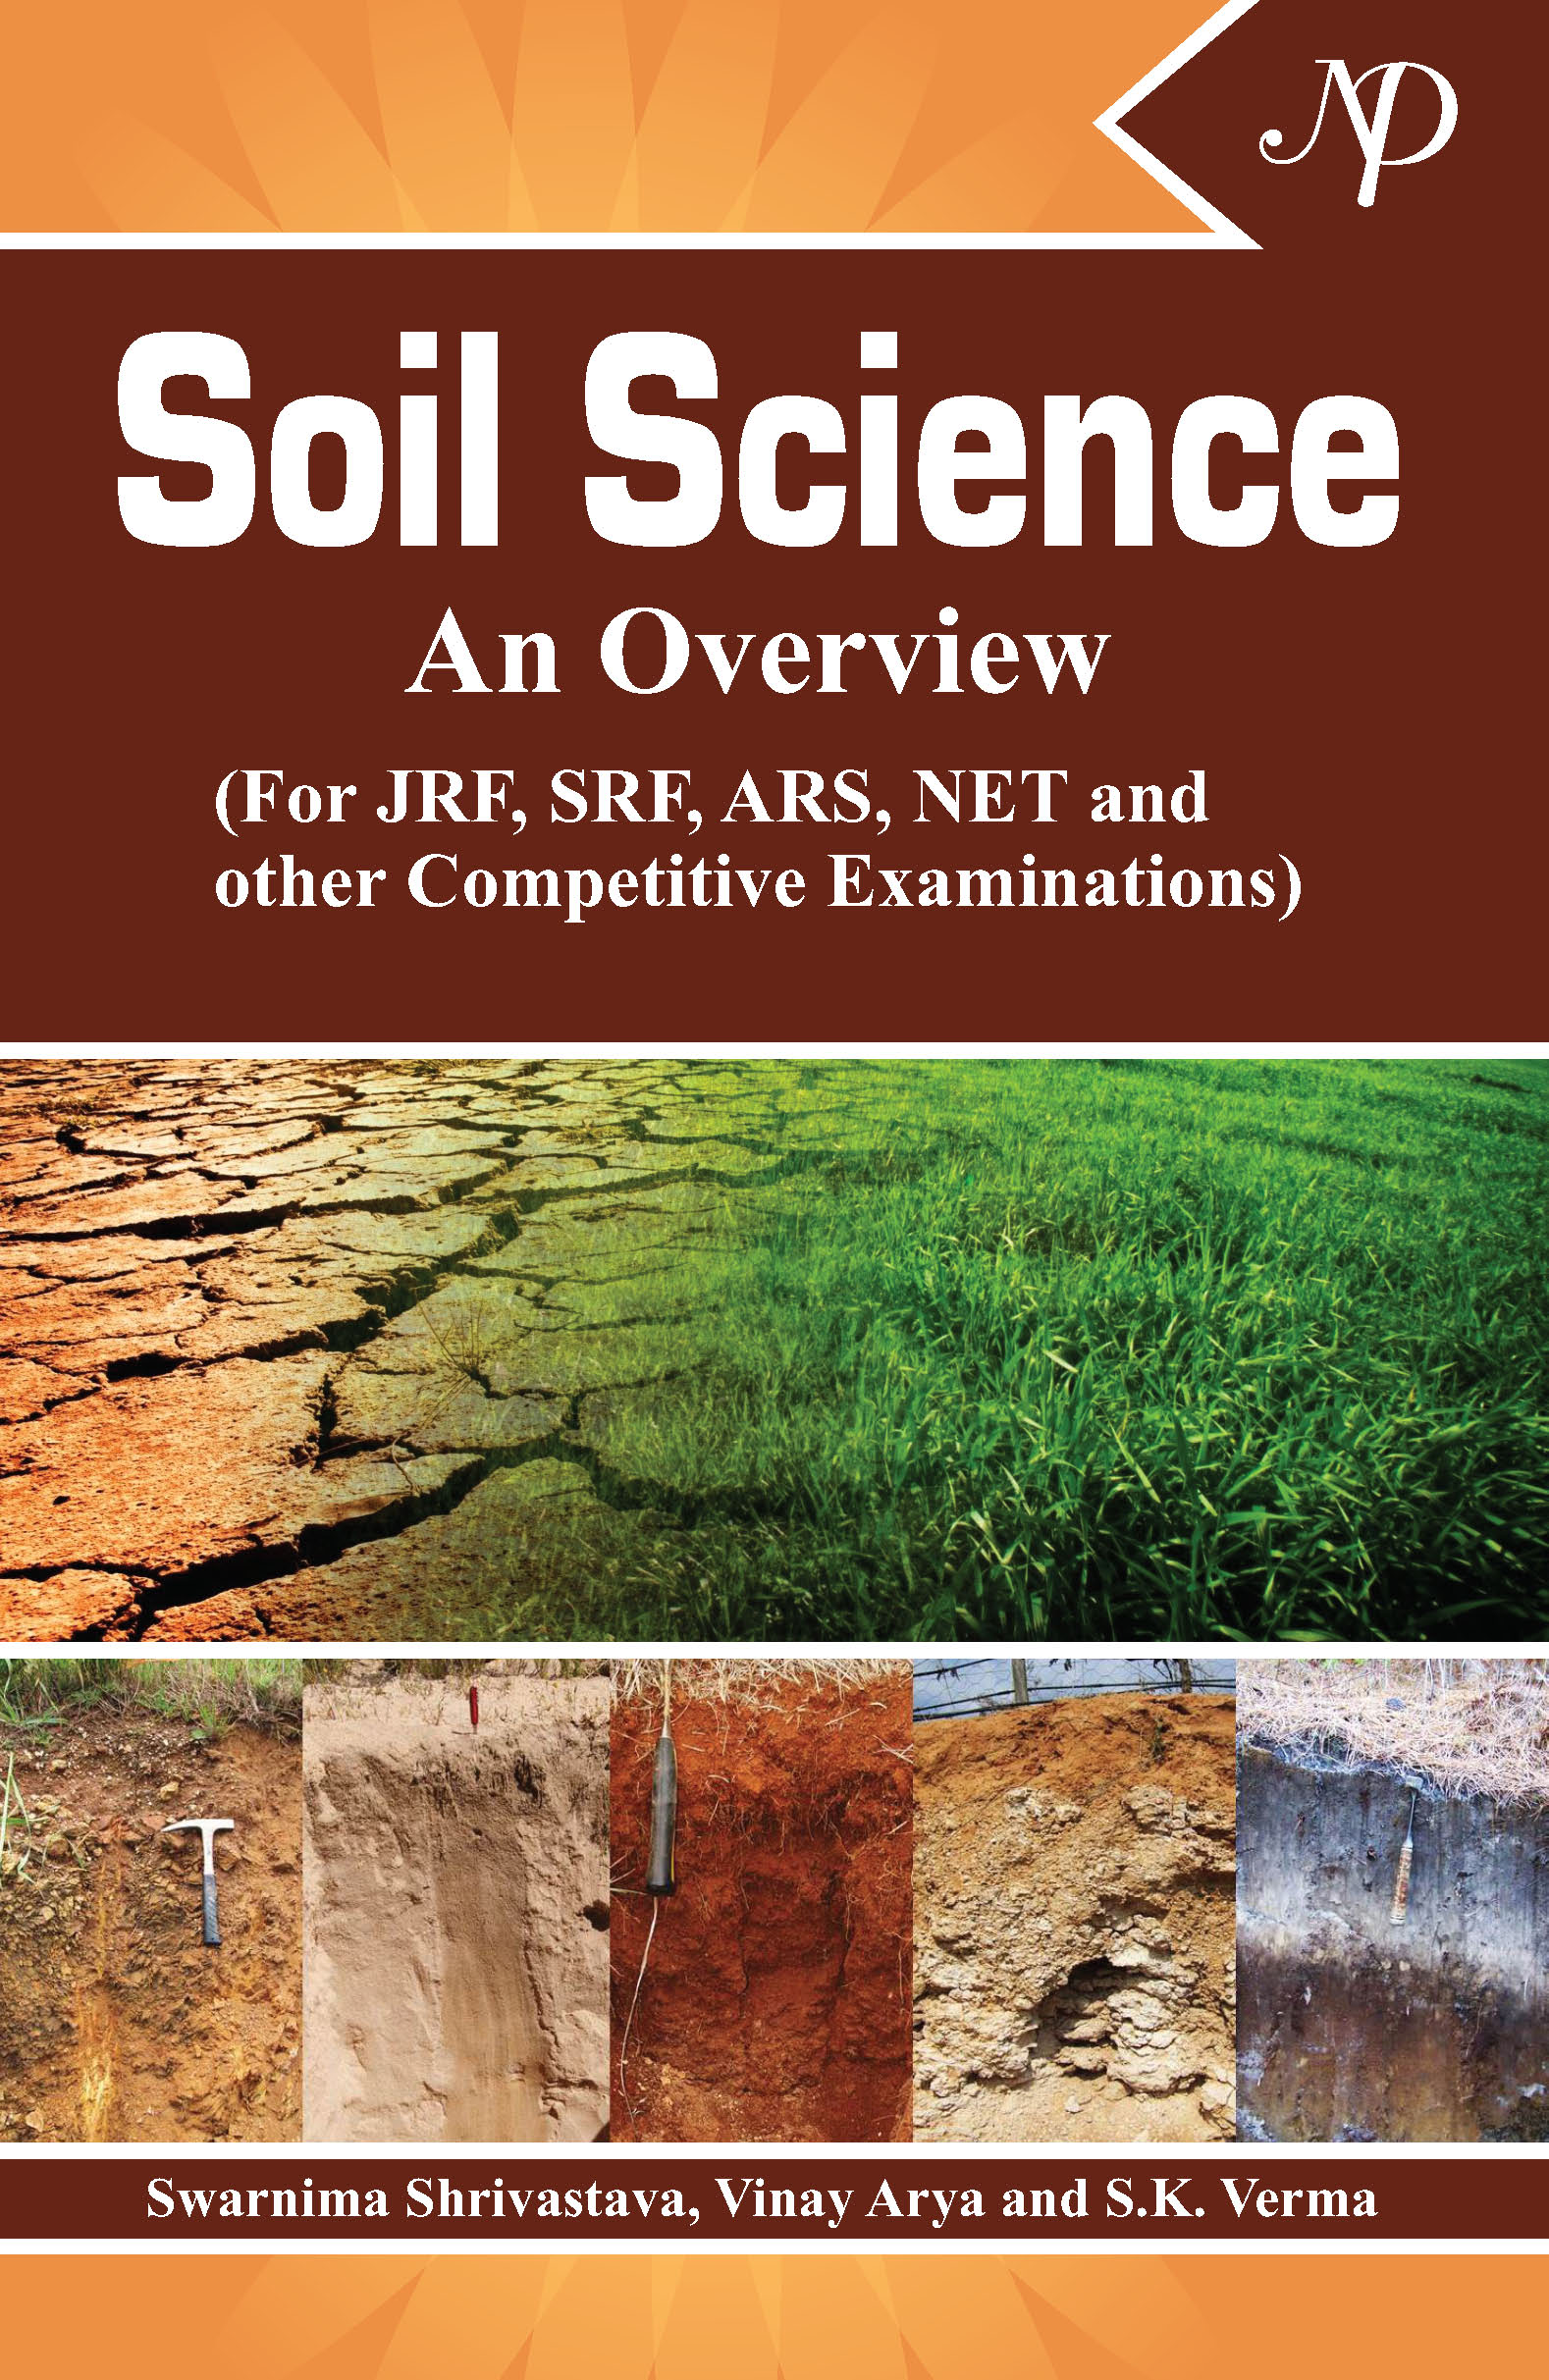 soil science an Overview--9-8-18.jpg